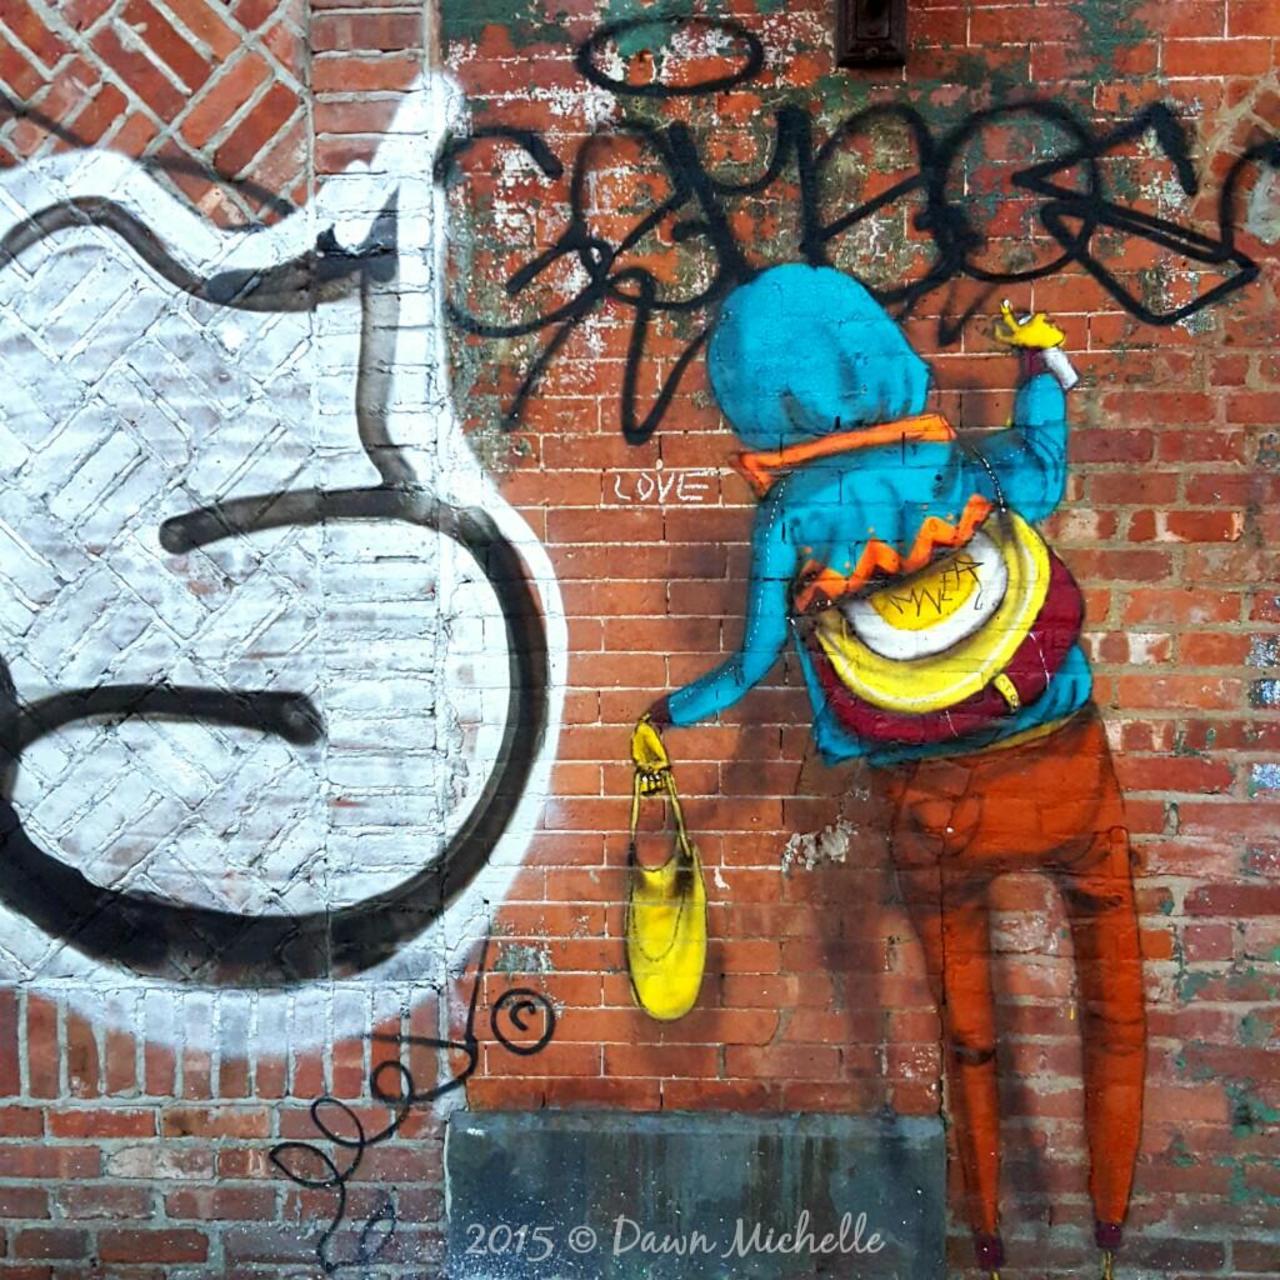 RT @cullin738: Dope @OsGemeos in #nyc #graffiti #streetart #art @circumjacent @MadeInManchestr @GraffitiFeed @NYCONLY https://t.co/kt5SMOXa8m